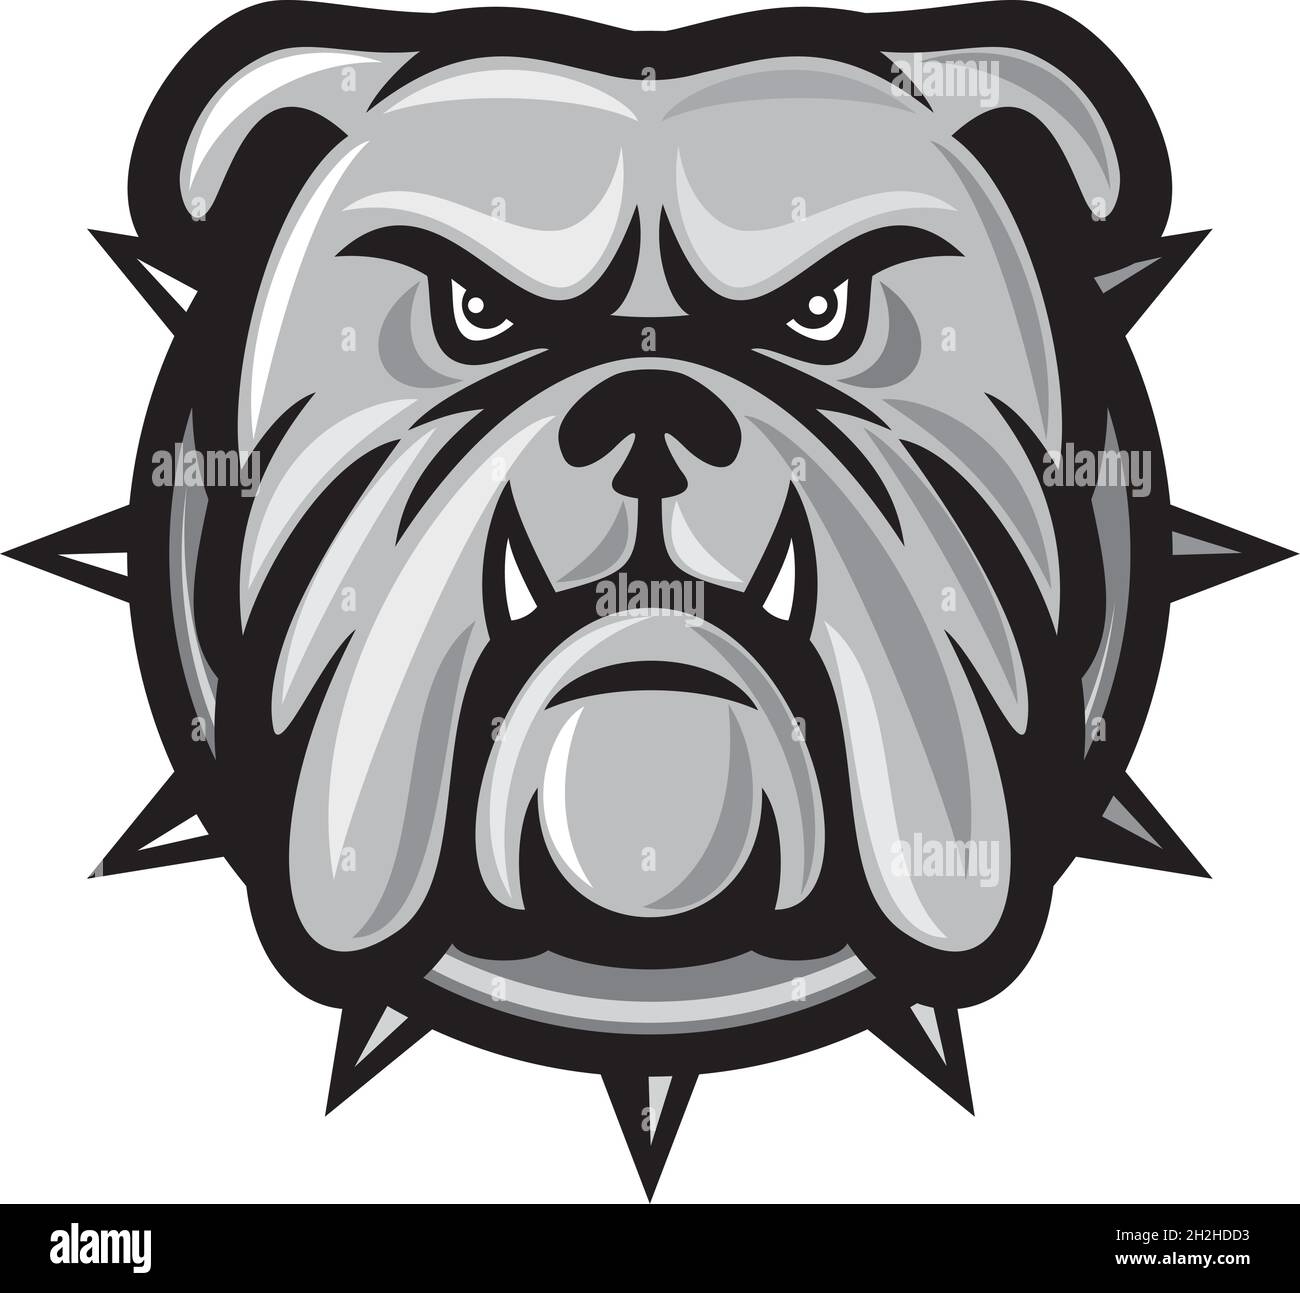 Angry bulldog head vector illustration Stock Vector